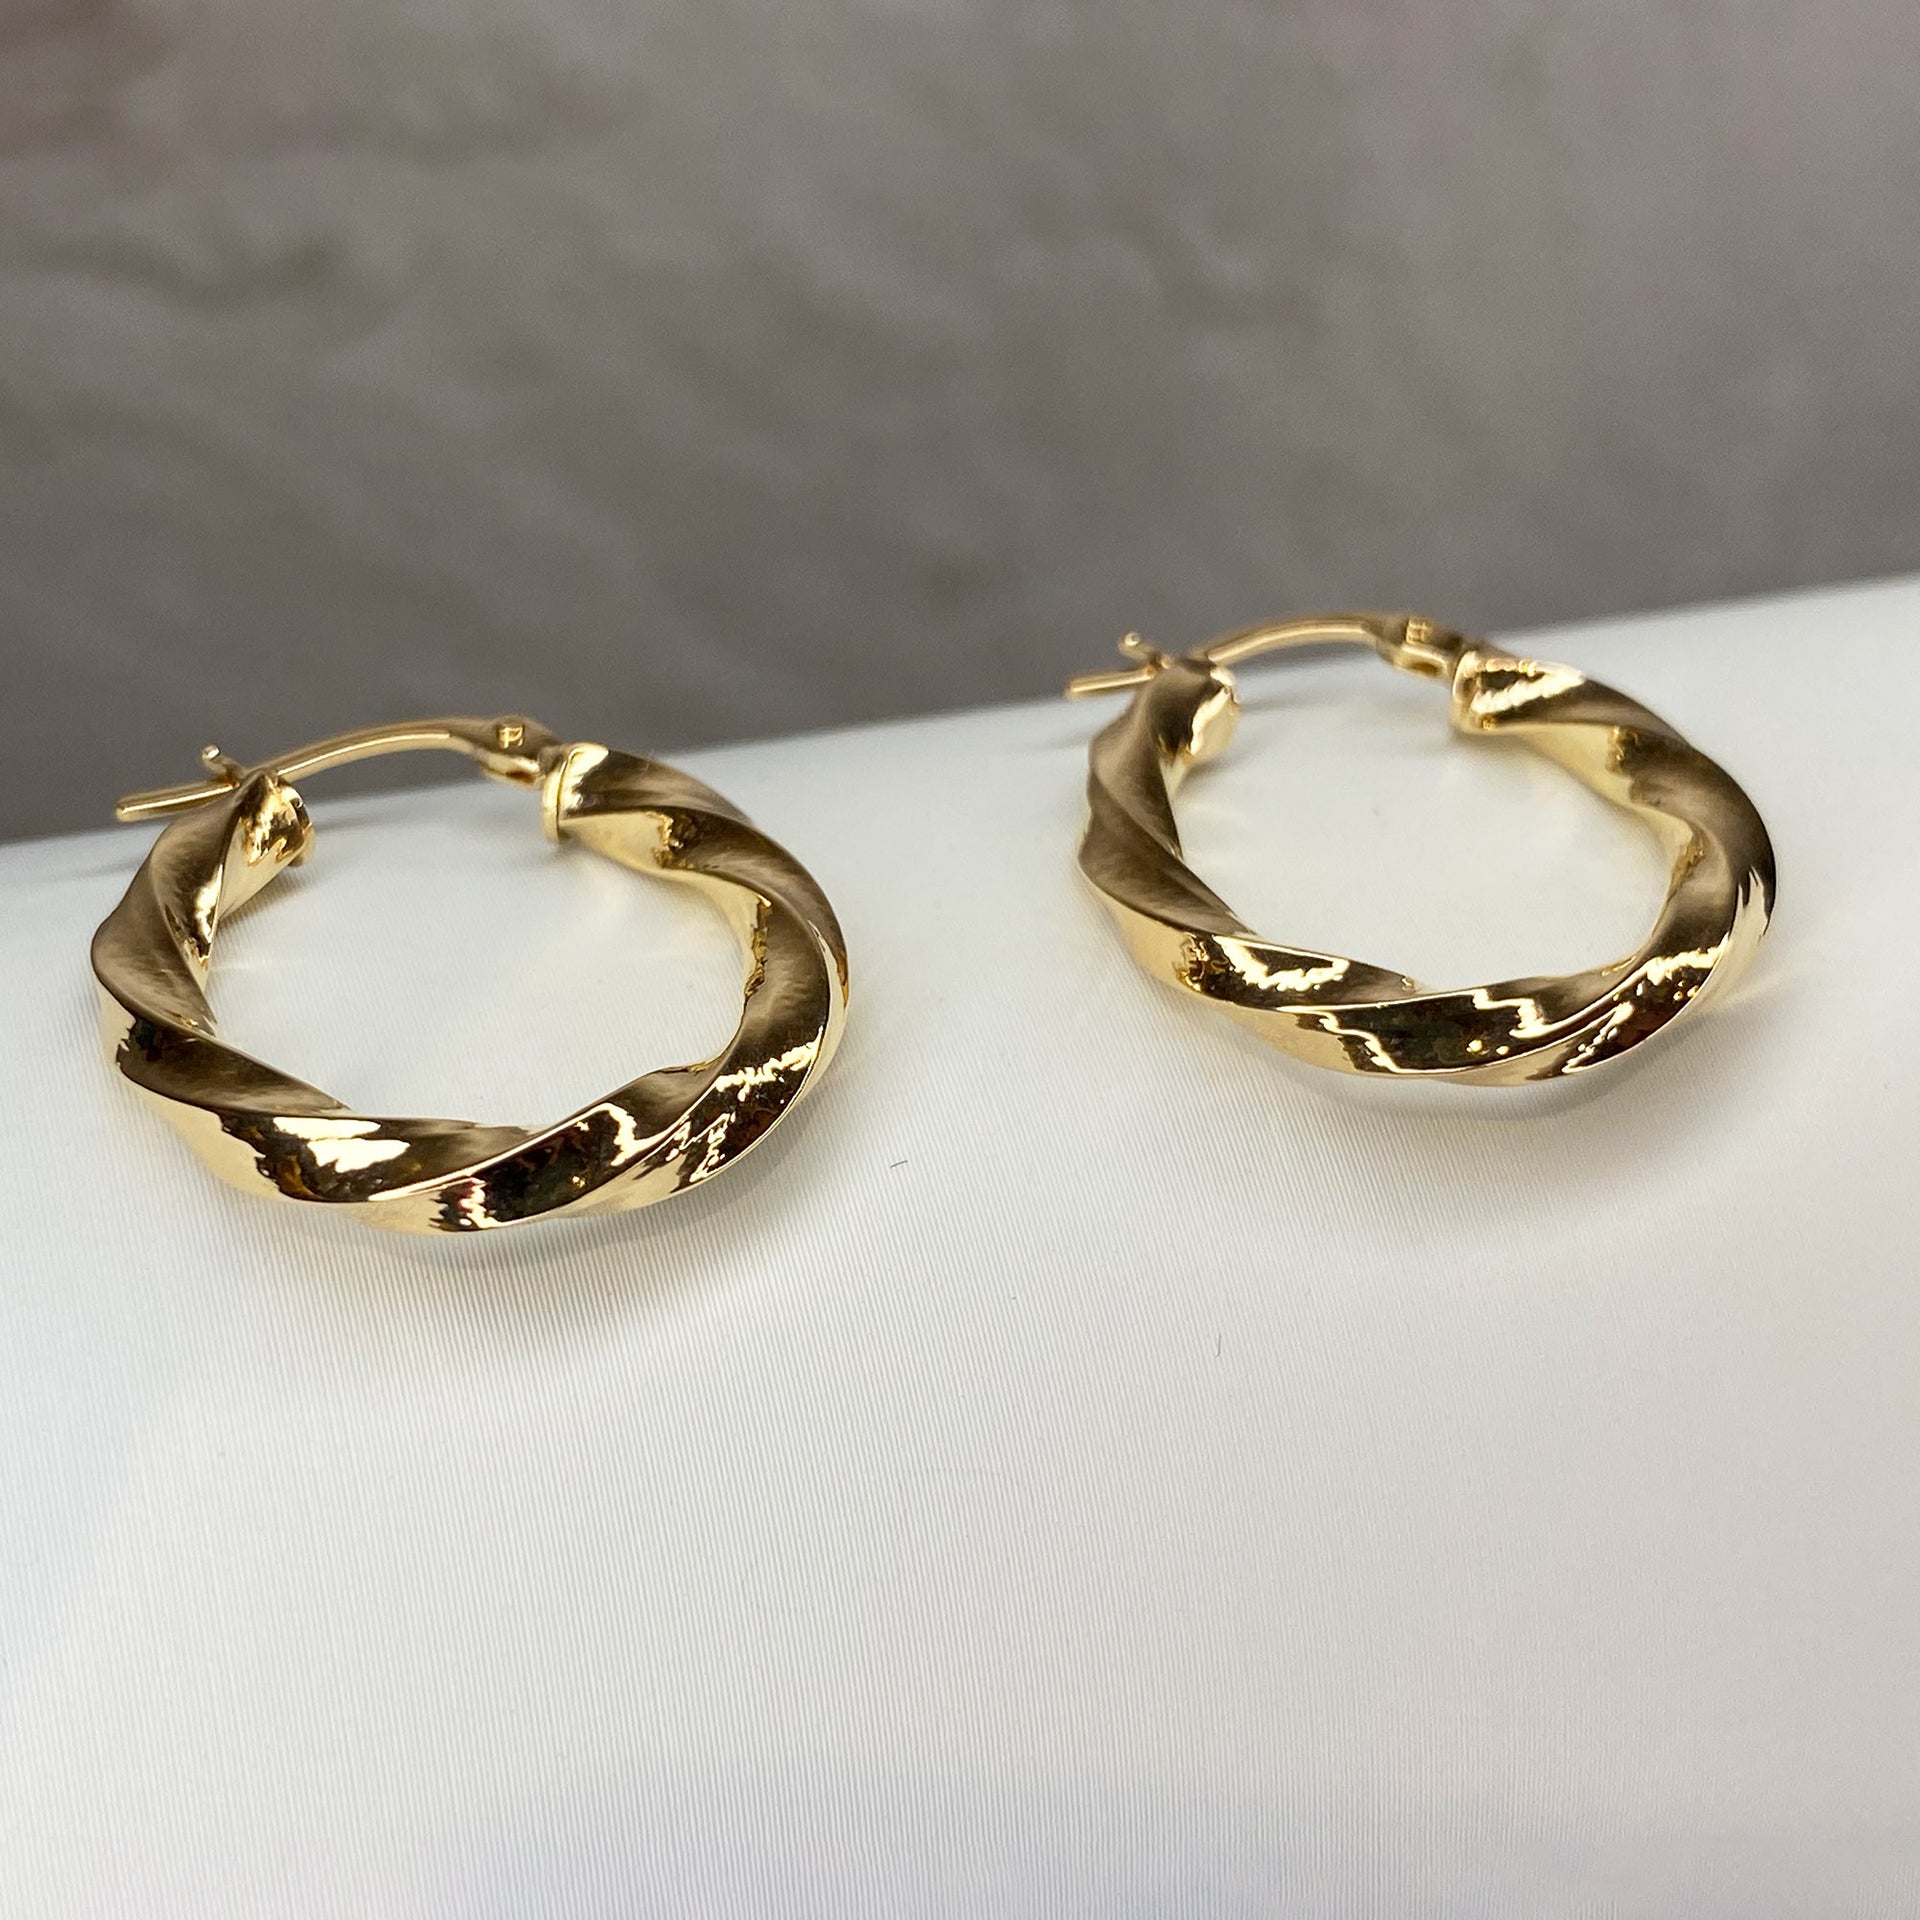 9ct solid Gold Twisted hoop earrings 21mm